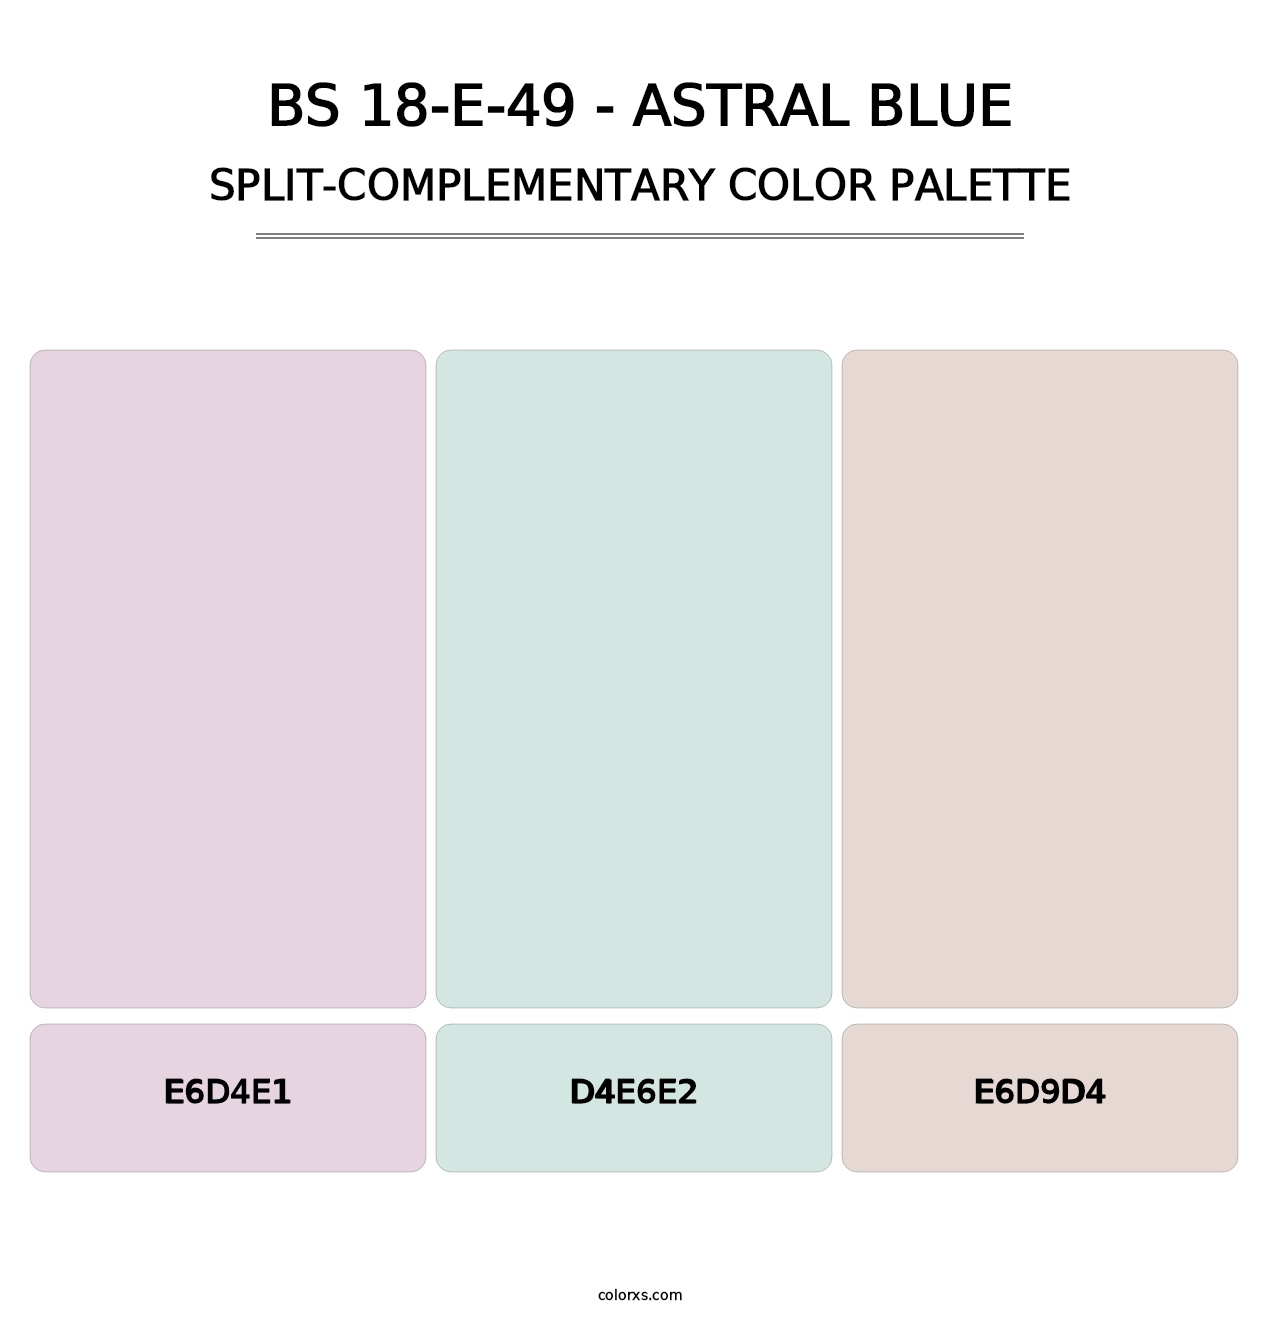 BS 18-E-49 - Astral Blue - Split-Complementary Color Palette